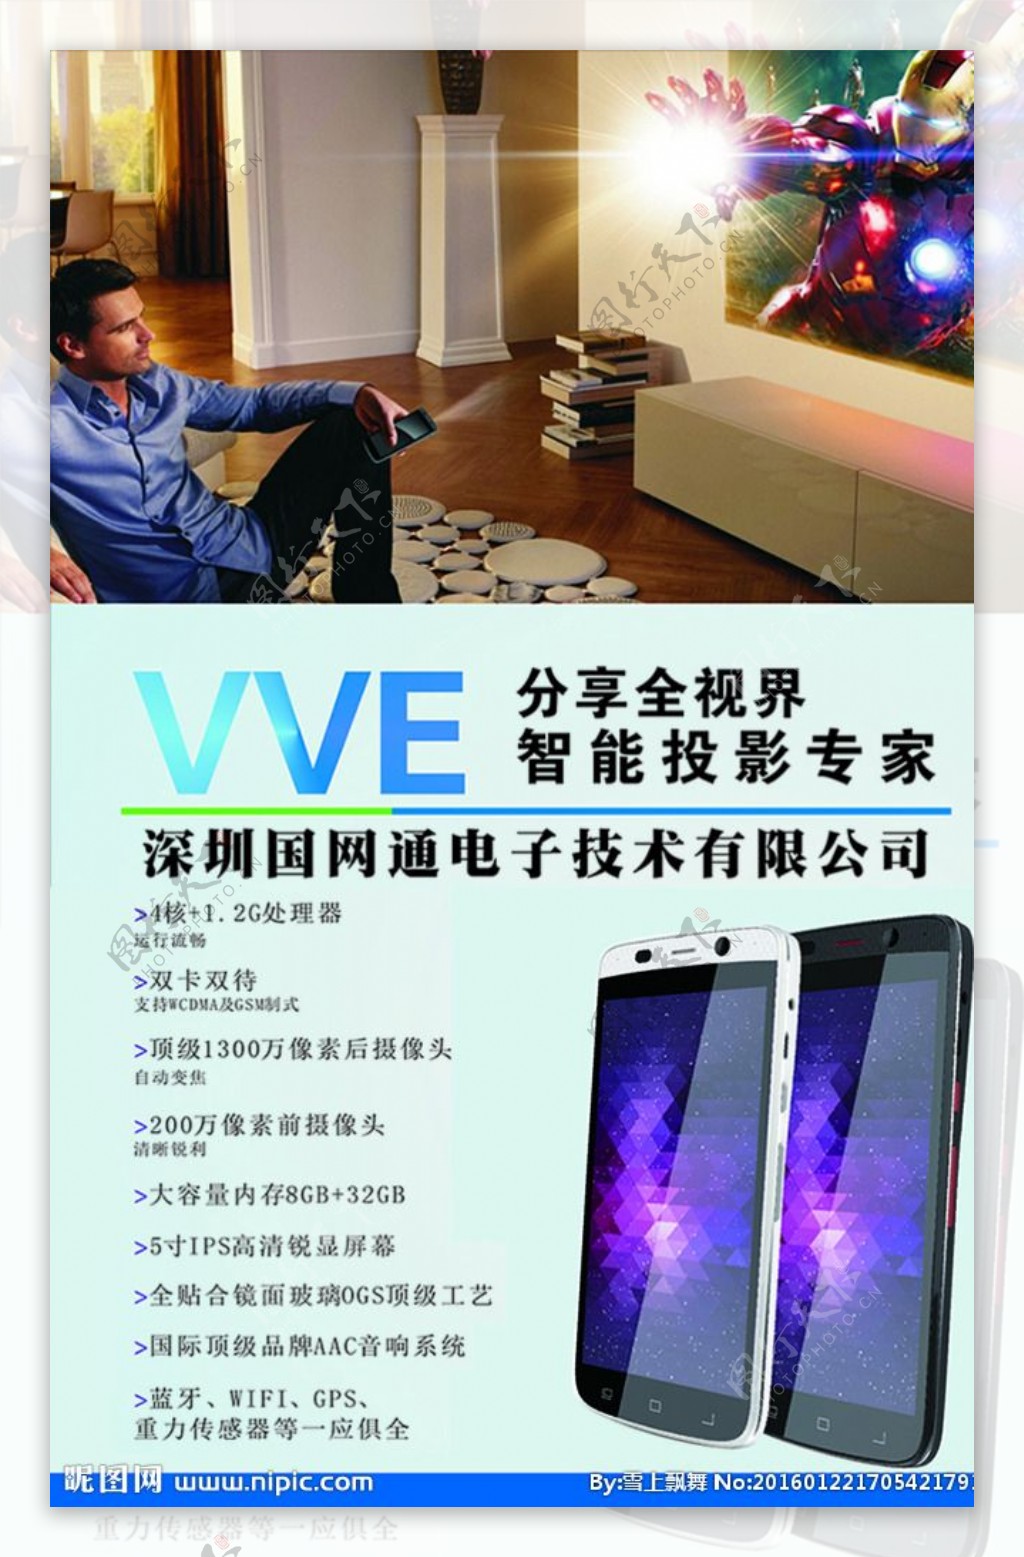 VVE投影手机广告